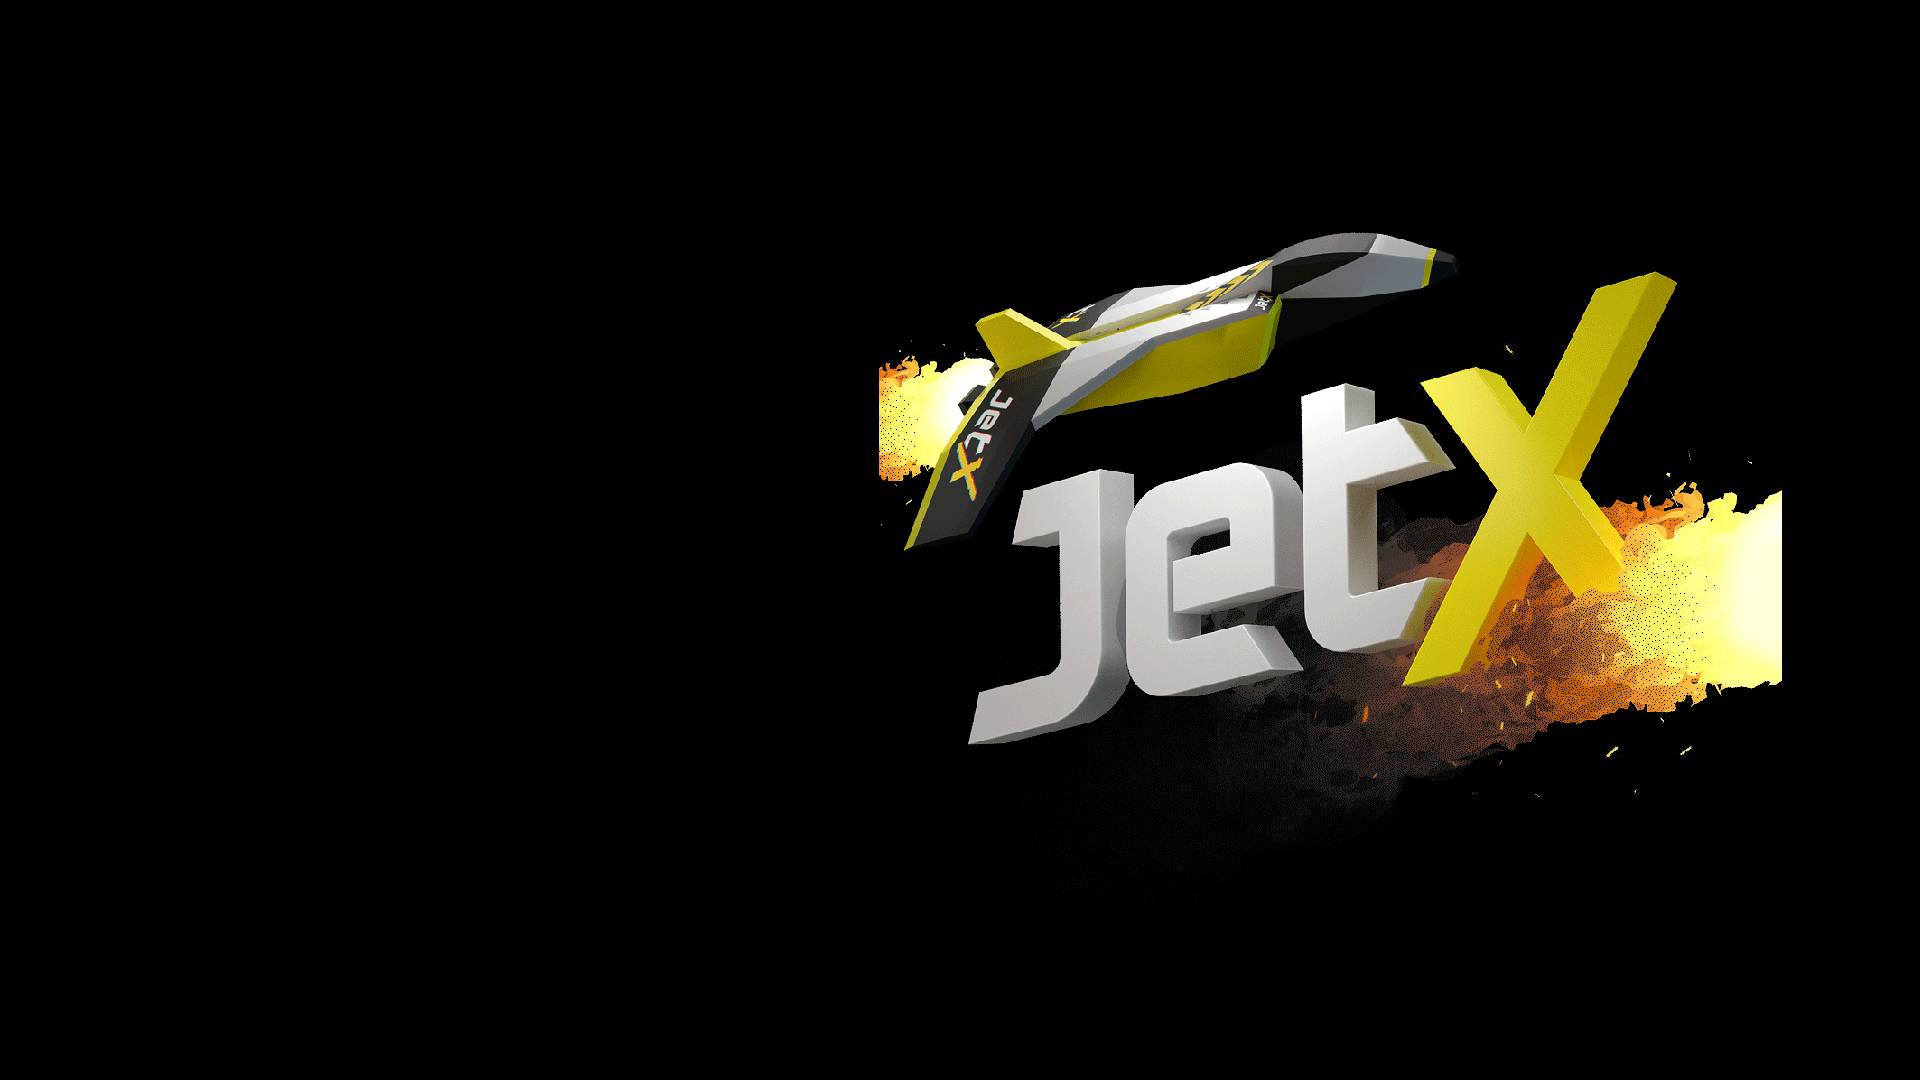 Jet X bg